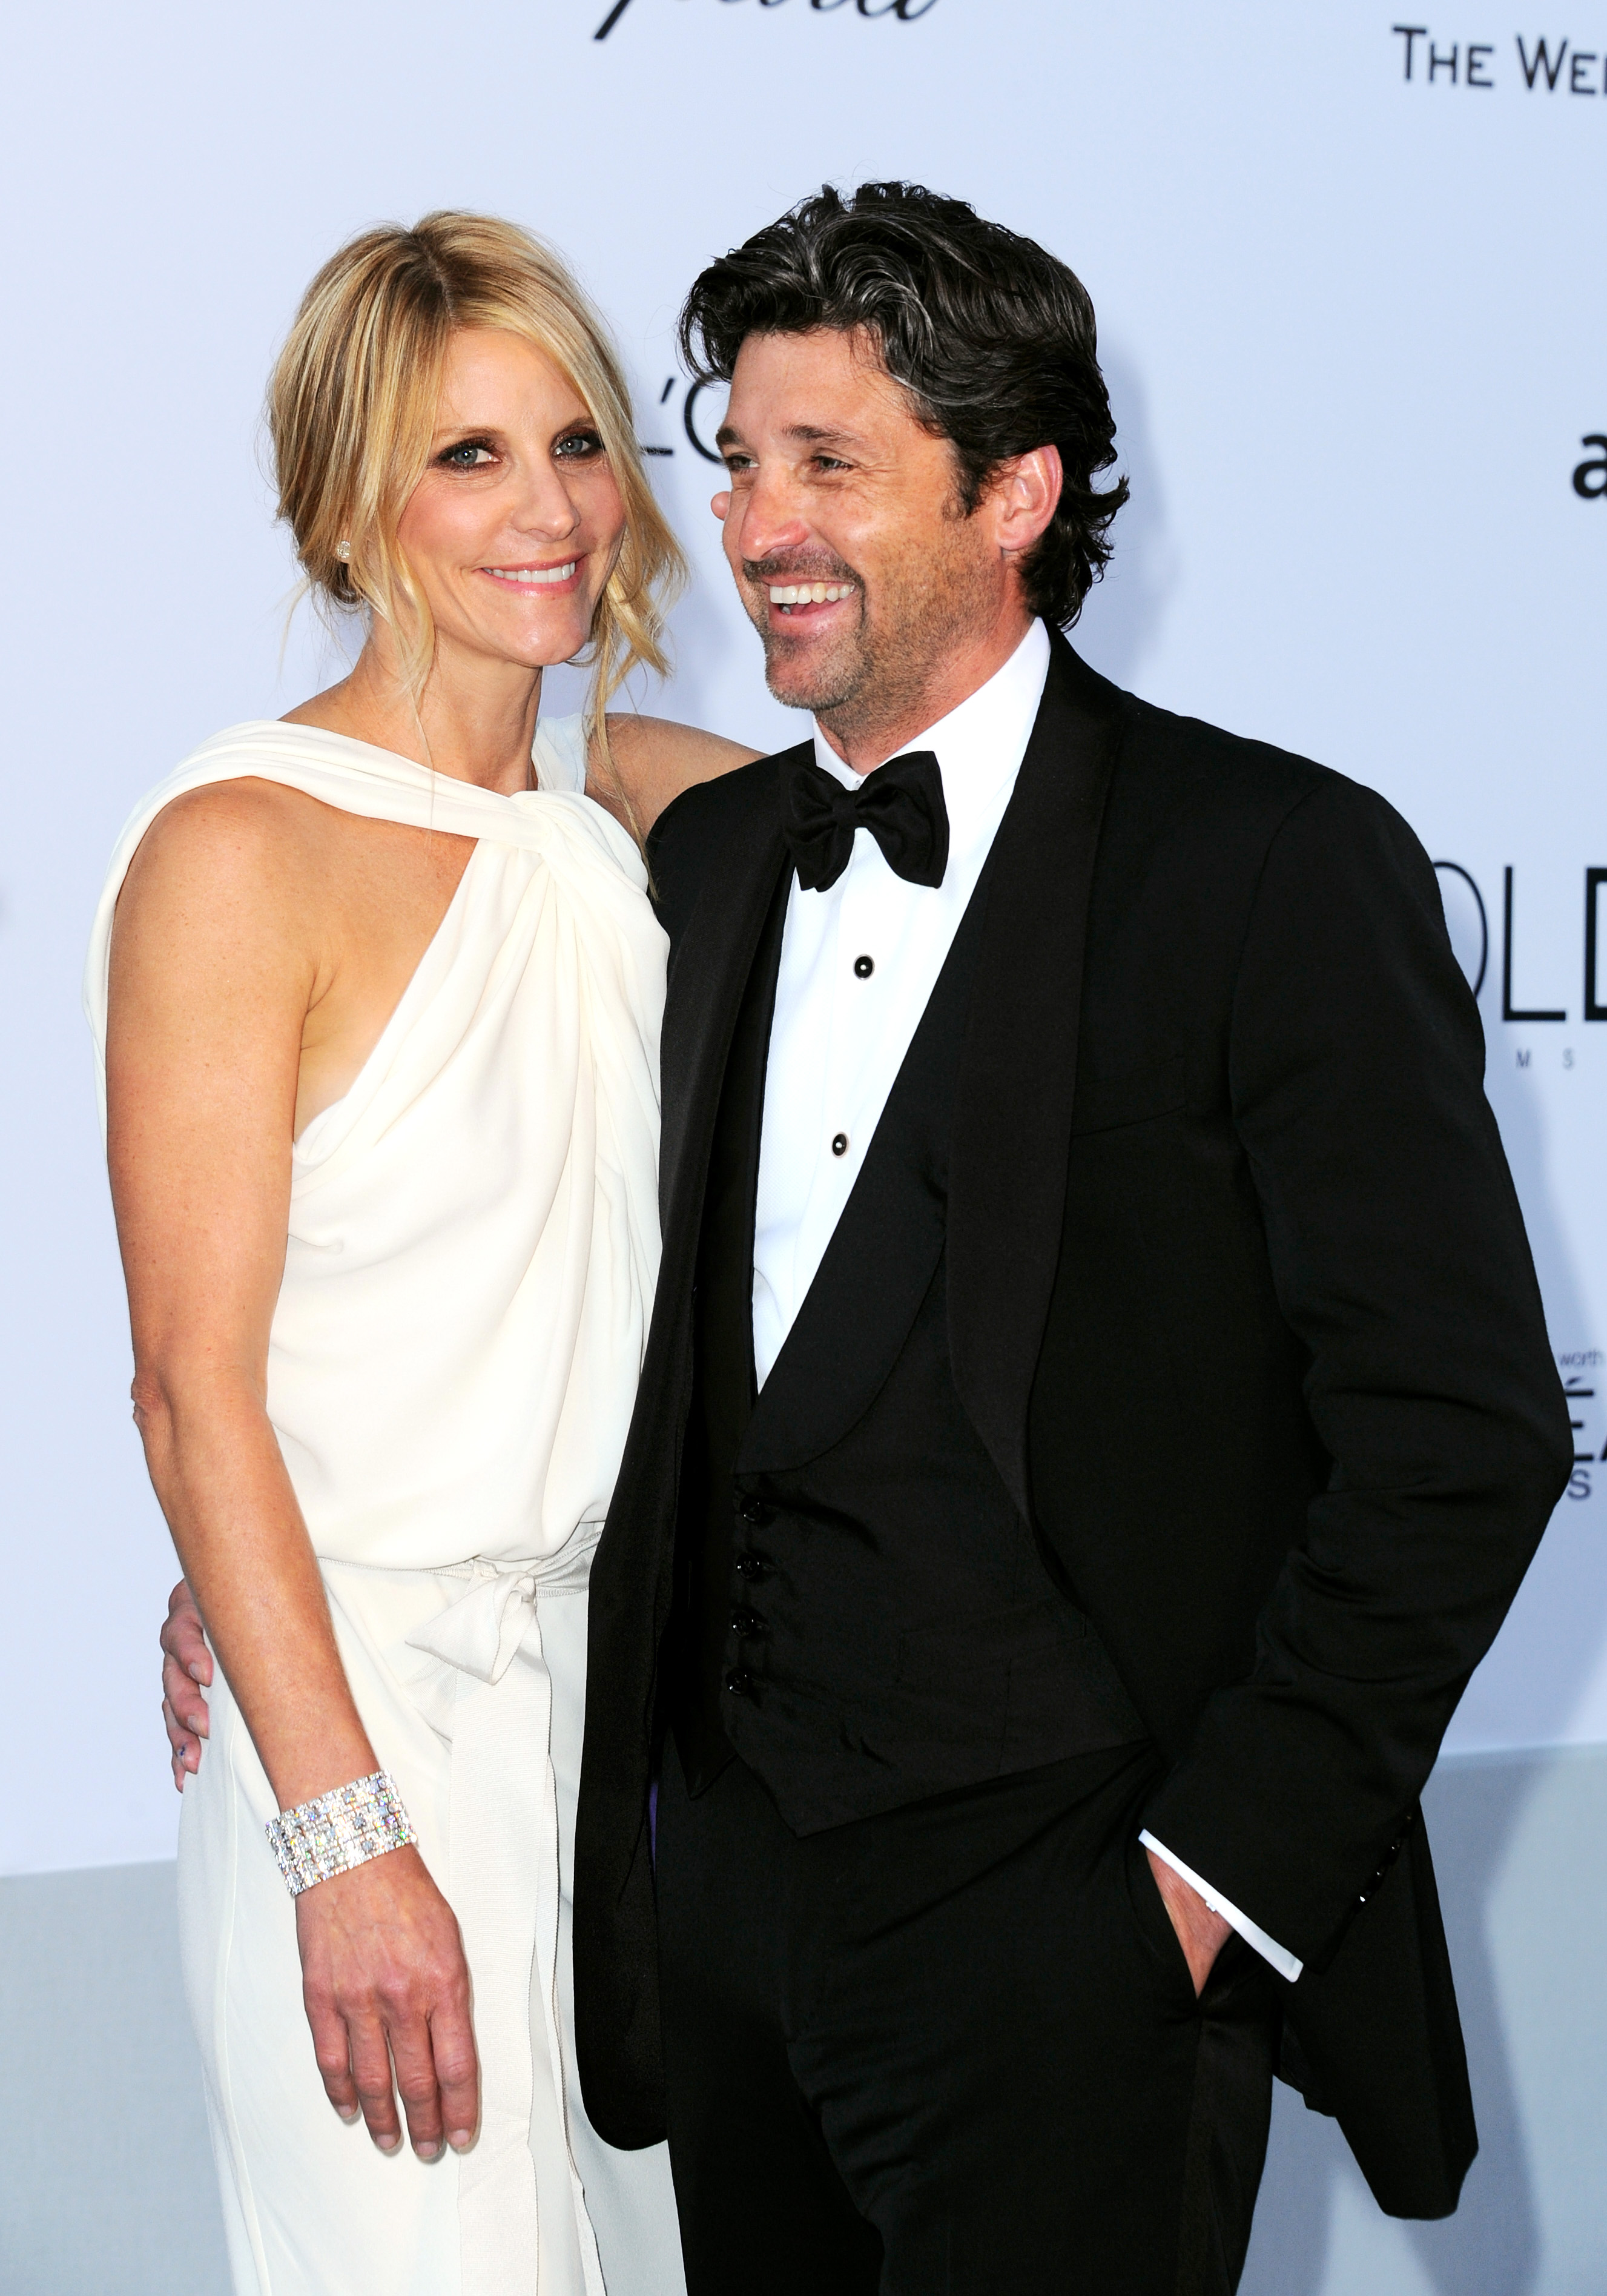 Who Is Patrick Dempsey's Wife? Meet His Spouse Jillian Fink